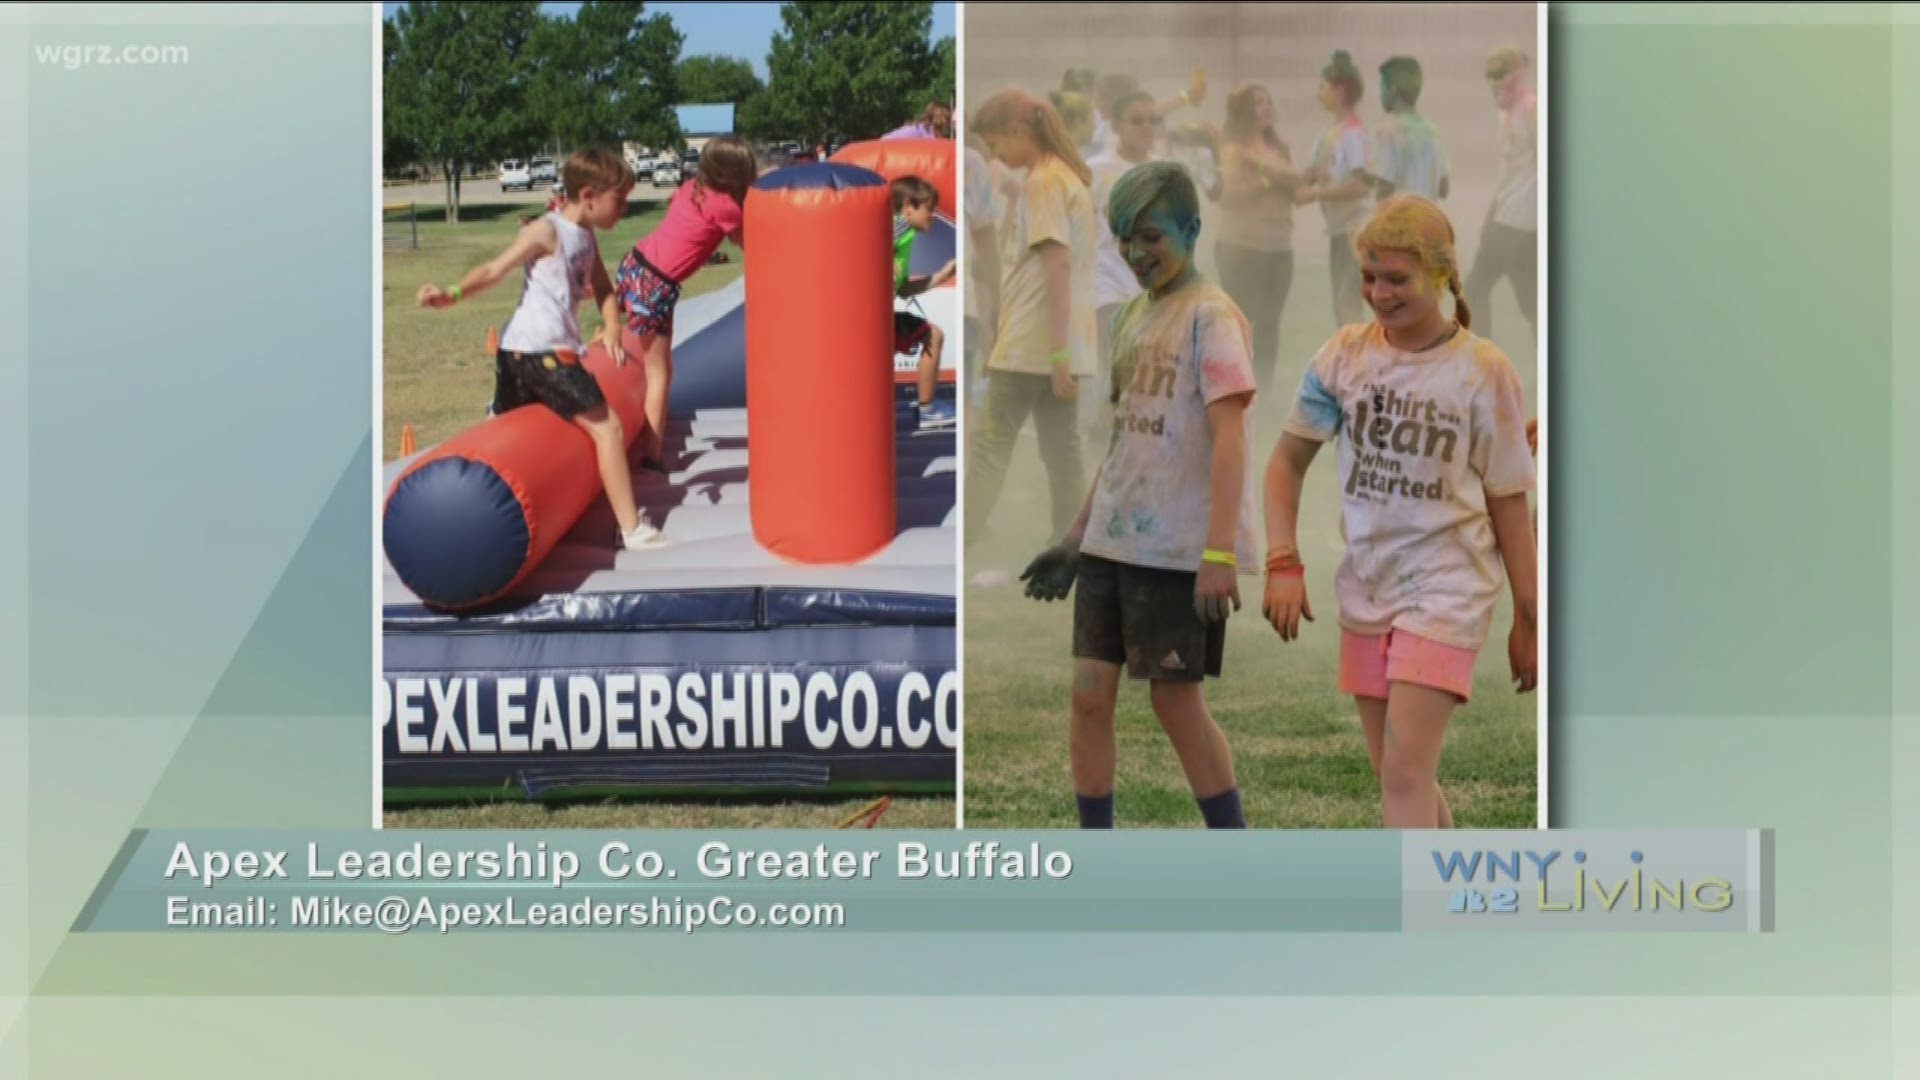 August 24 - Apex Leadership Co. Greater Buffalo